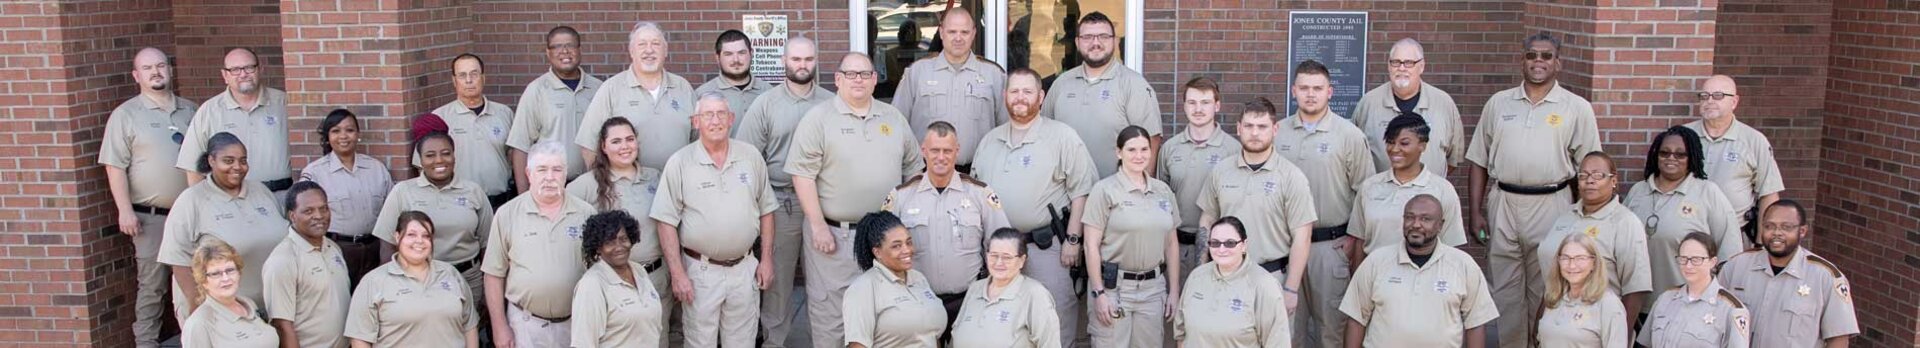 Jones County Sheriff's office staff photo